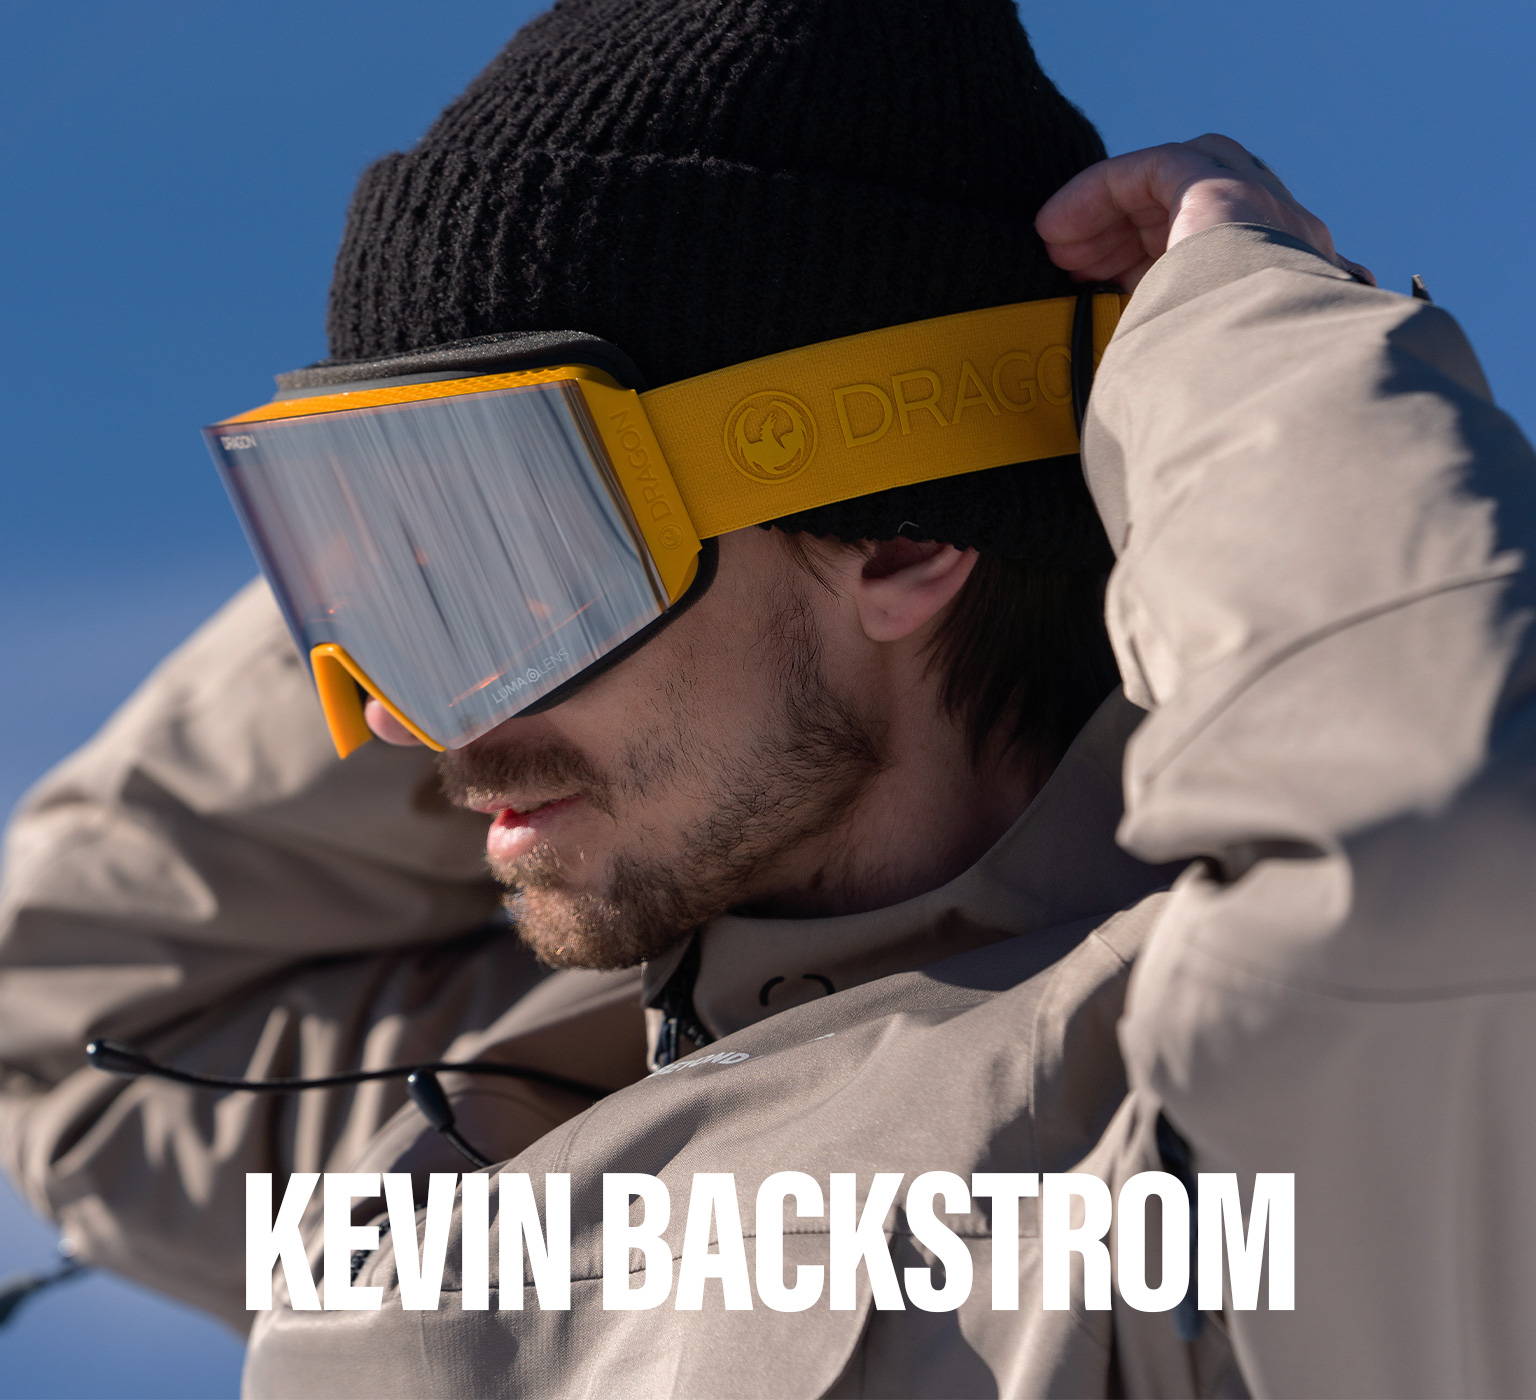 Kevin Backstrom